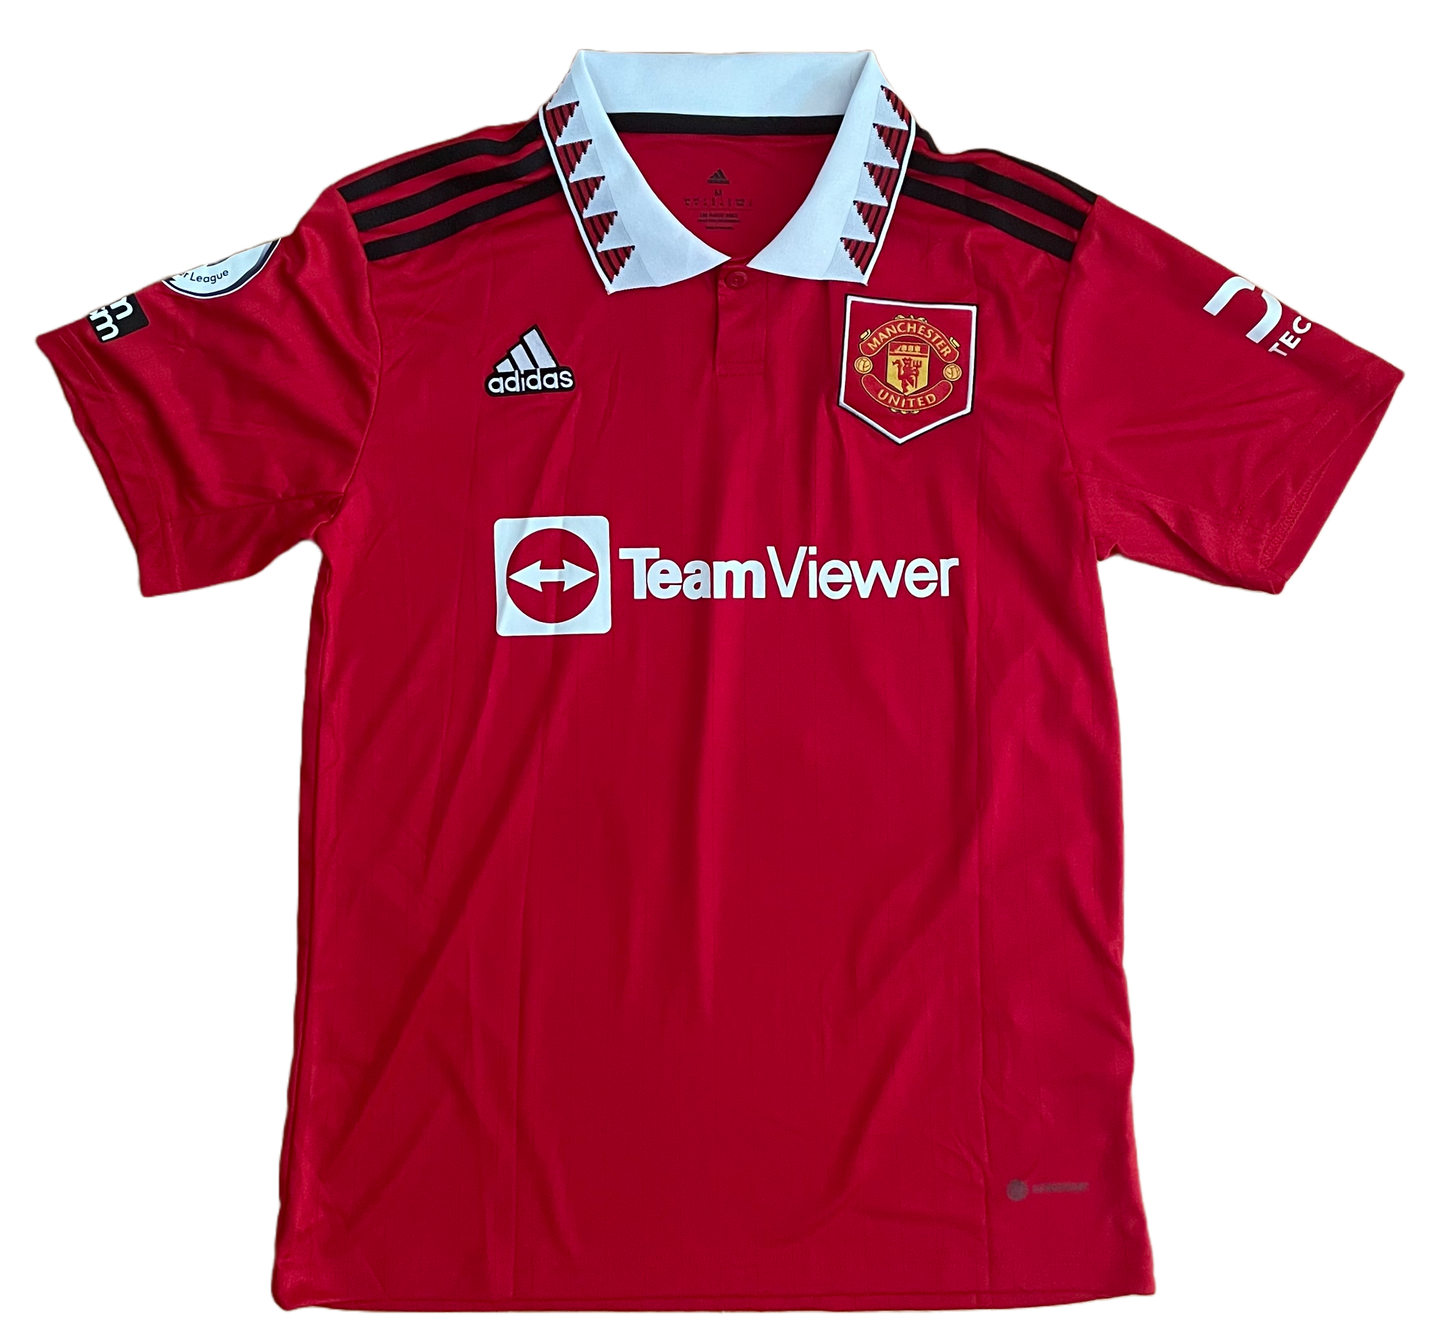 Signed Christian Eriksen Manchester United Home Shirt 22/23